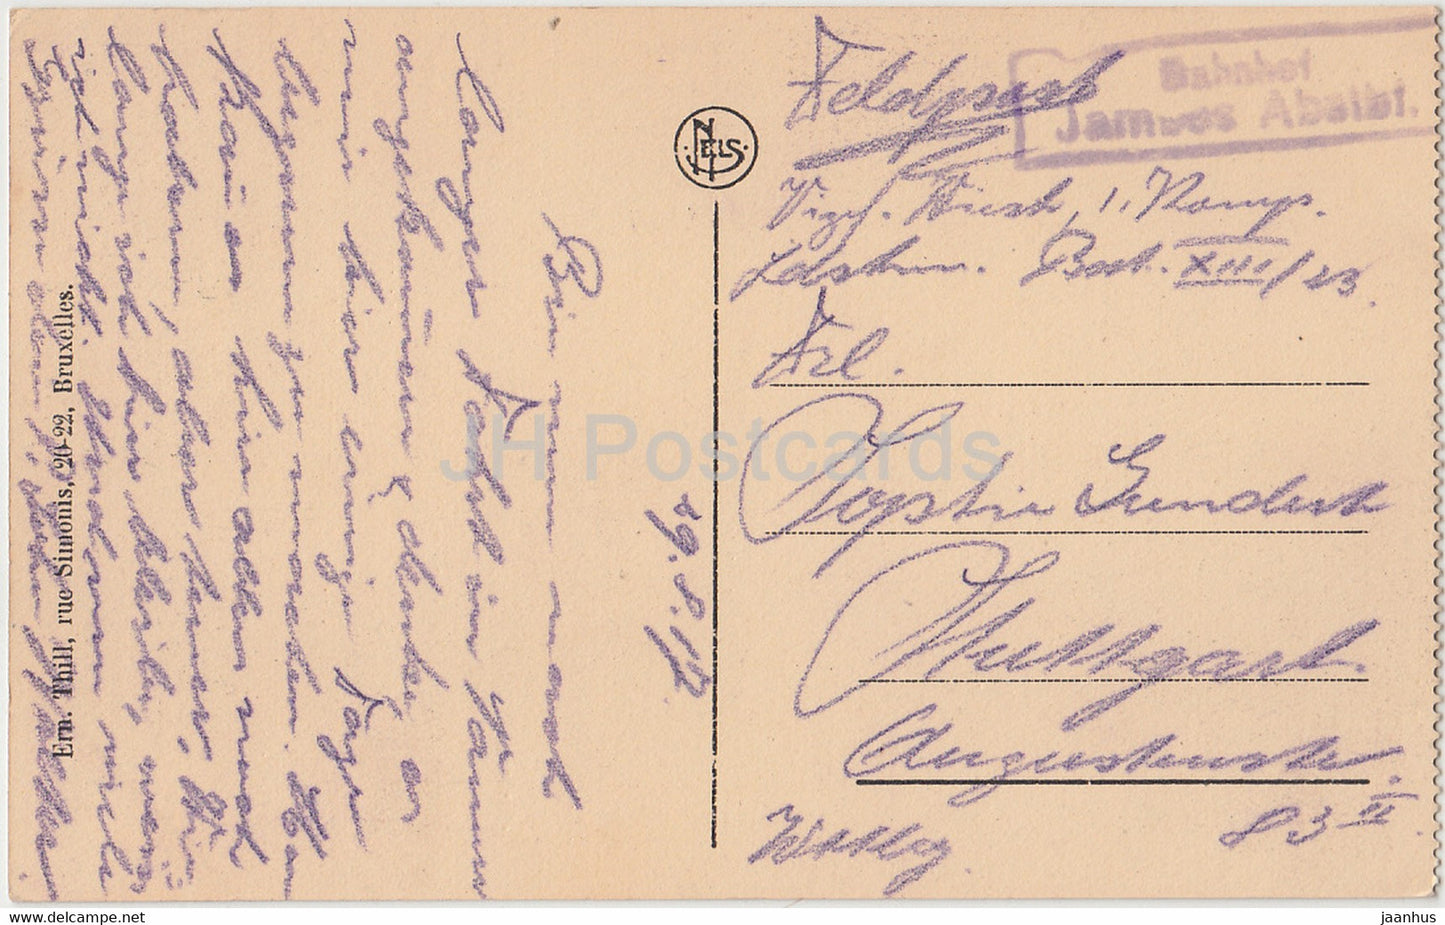 Namur - La Sambre et Panorama - Feldpost - carte postale ancienne - 1917 - Belgique - occasion